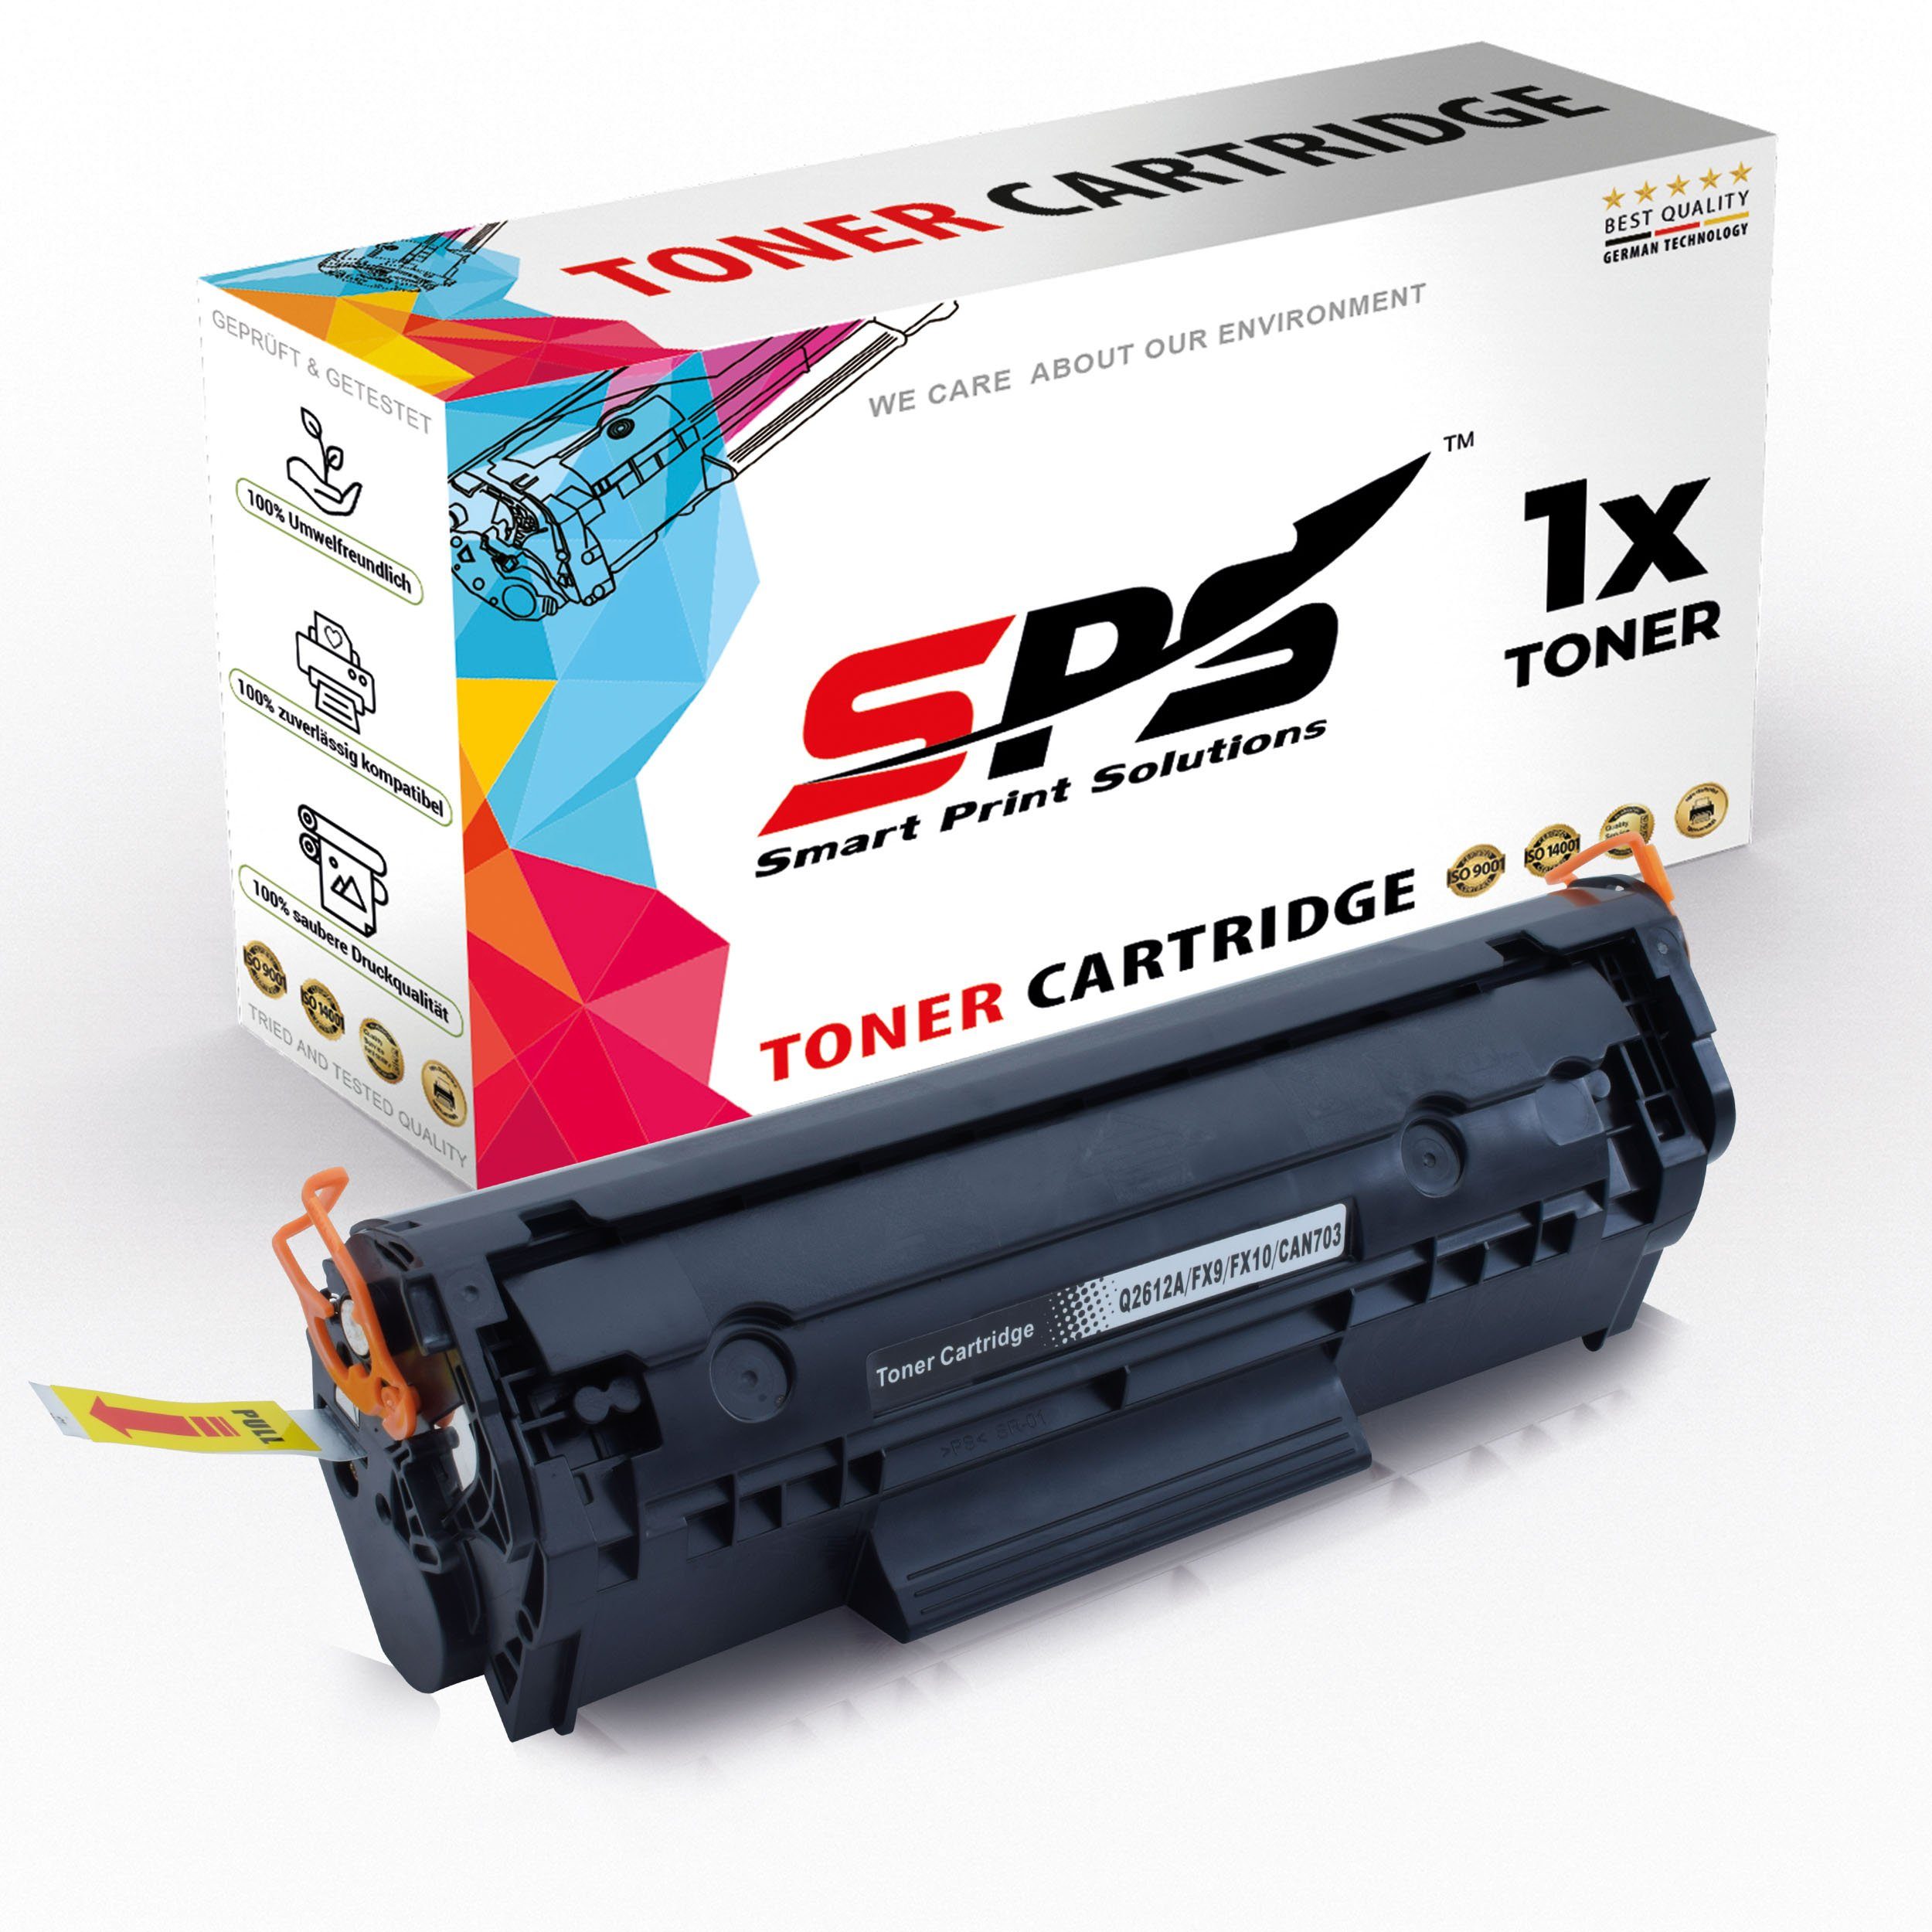 Outlet-Produkte SPS Tonerkartusche HP Laserjet 3052 12A Kompatibel Q2612A, Pack) für (1er